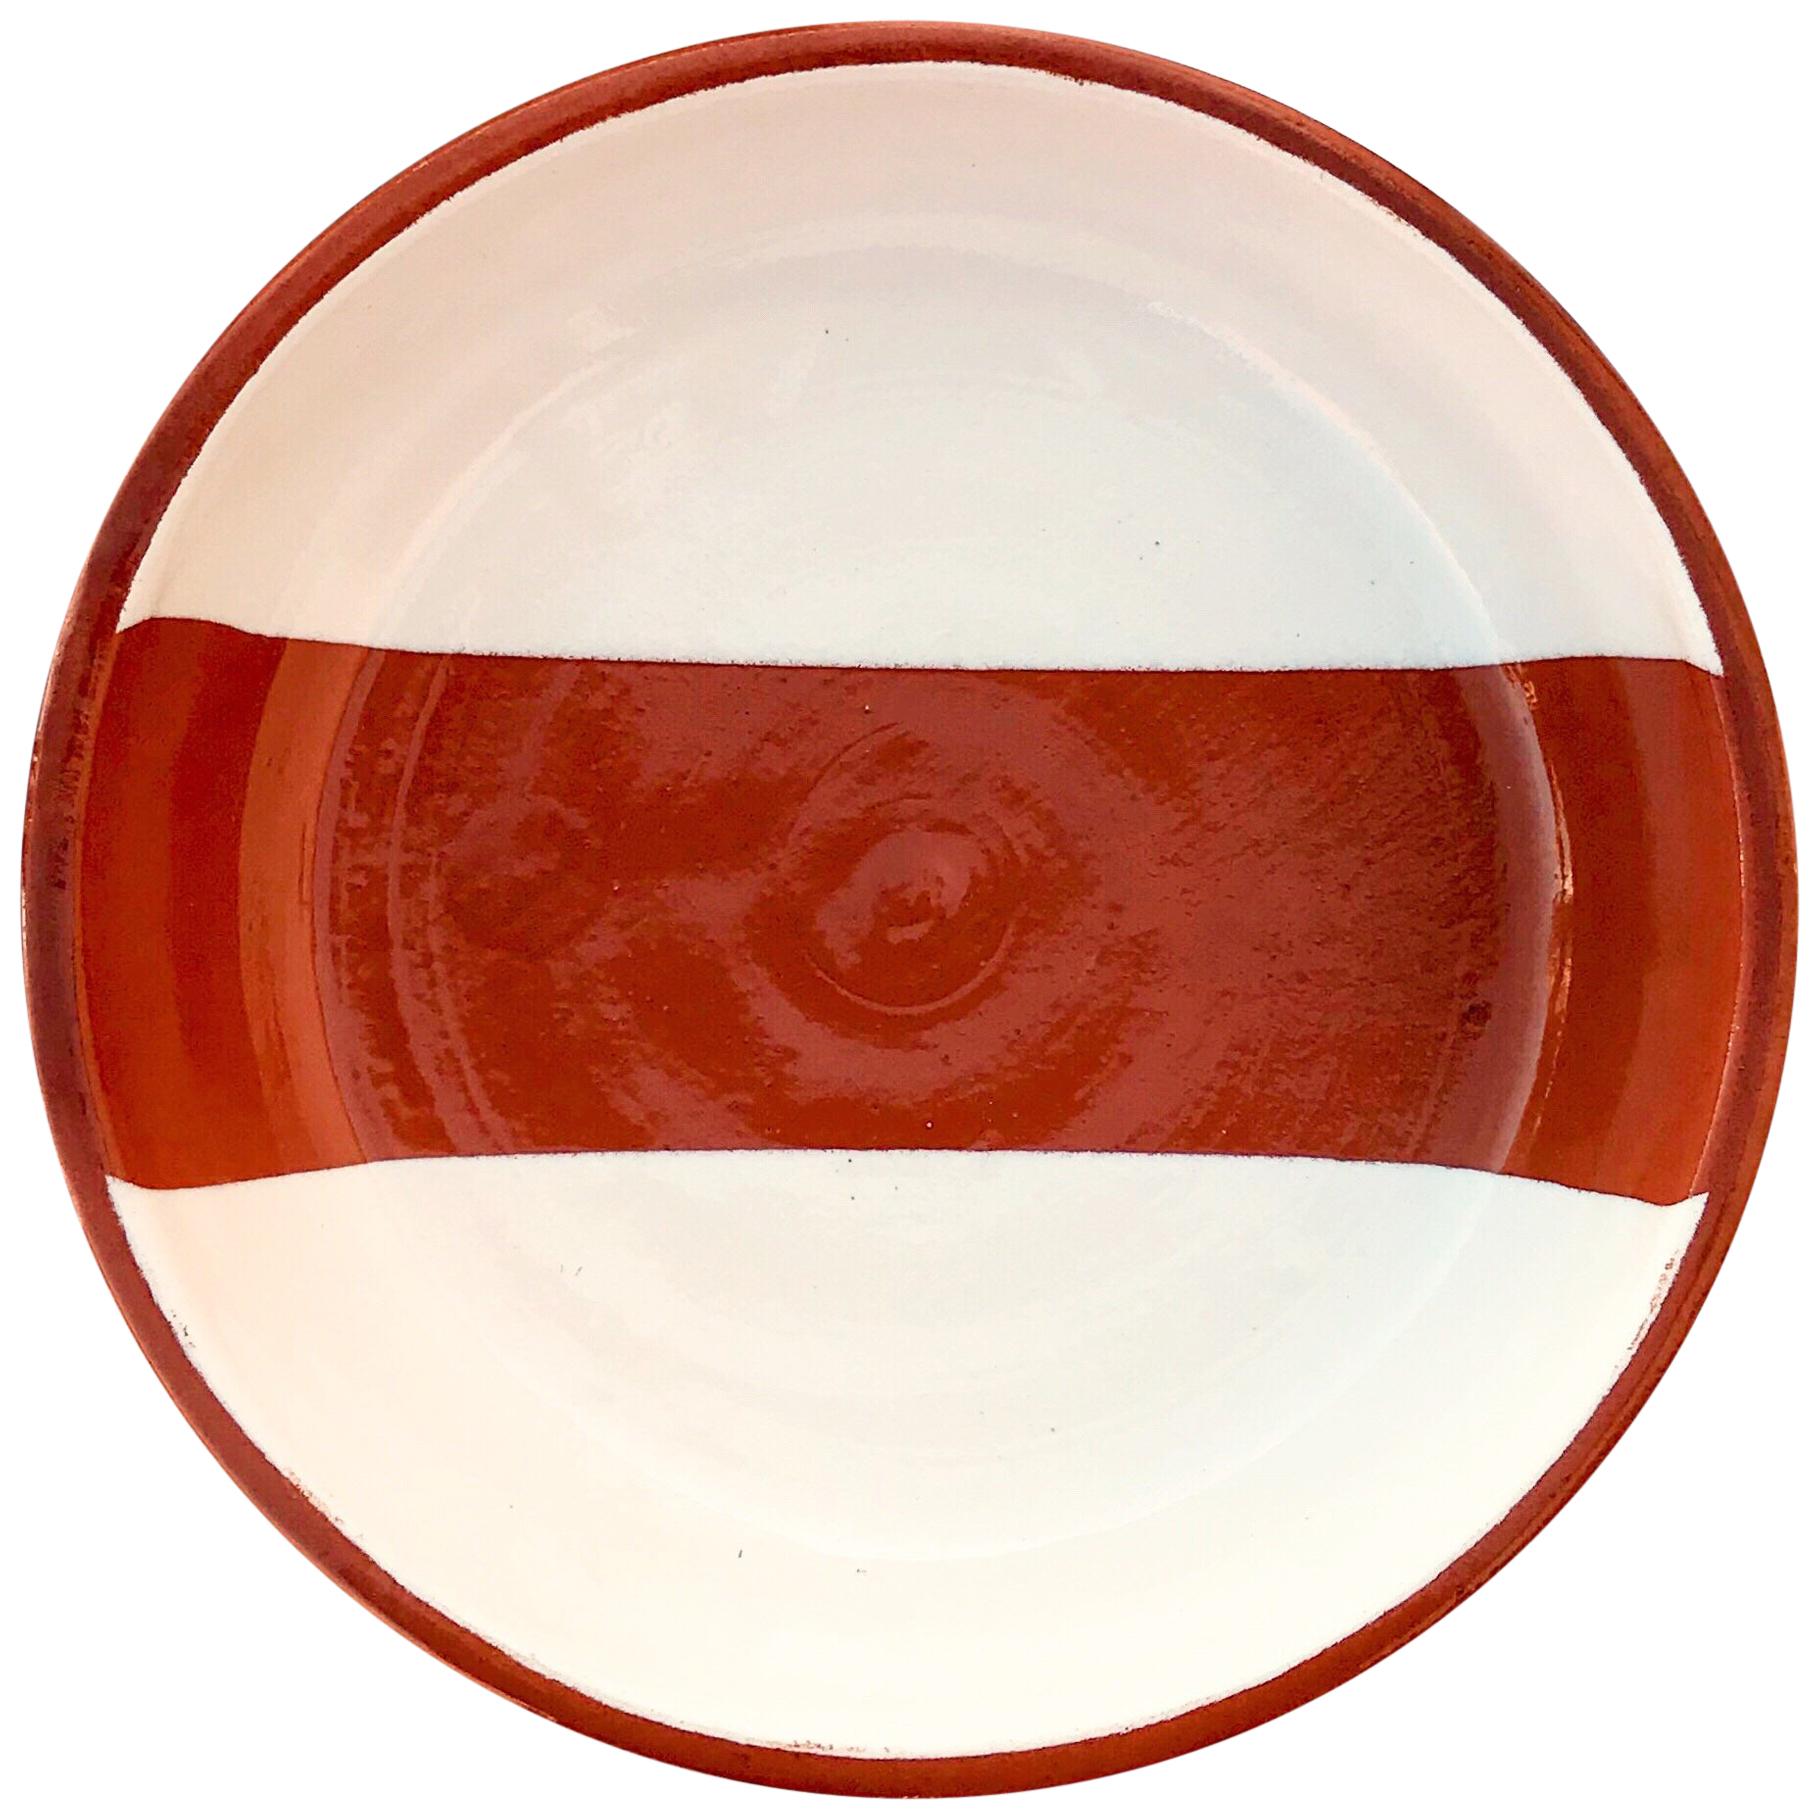 Handmade Ceramic Rectangle Bowl in Terracotta and White, in Stock